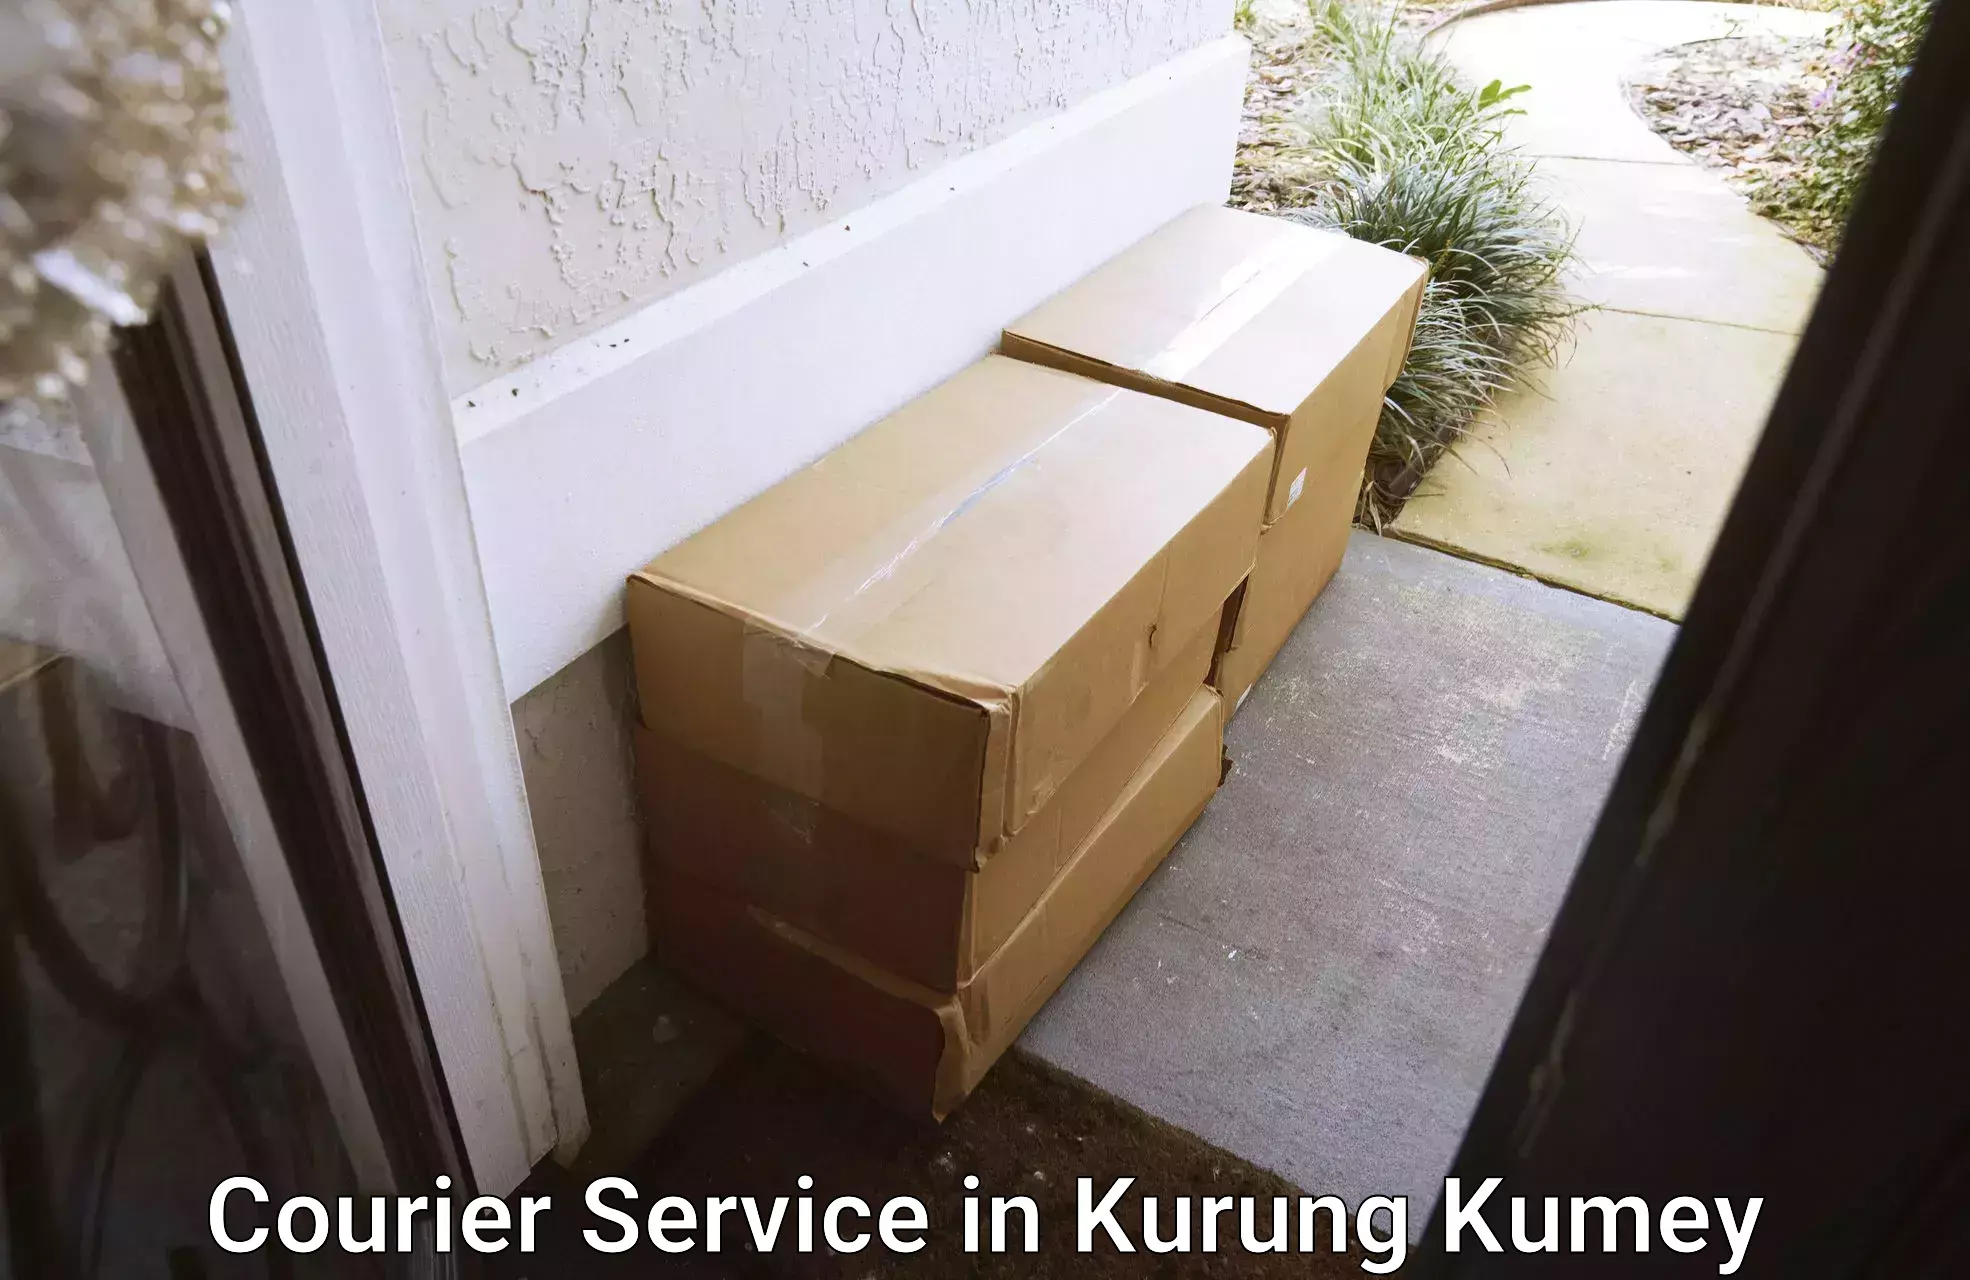 Courier service partnerships in Kurung Kumey